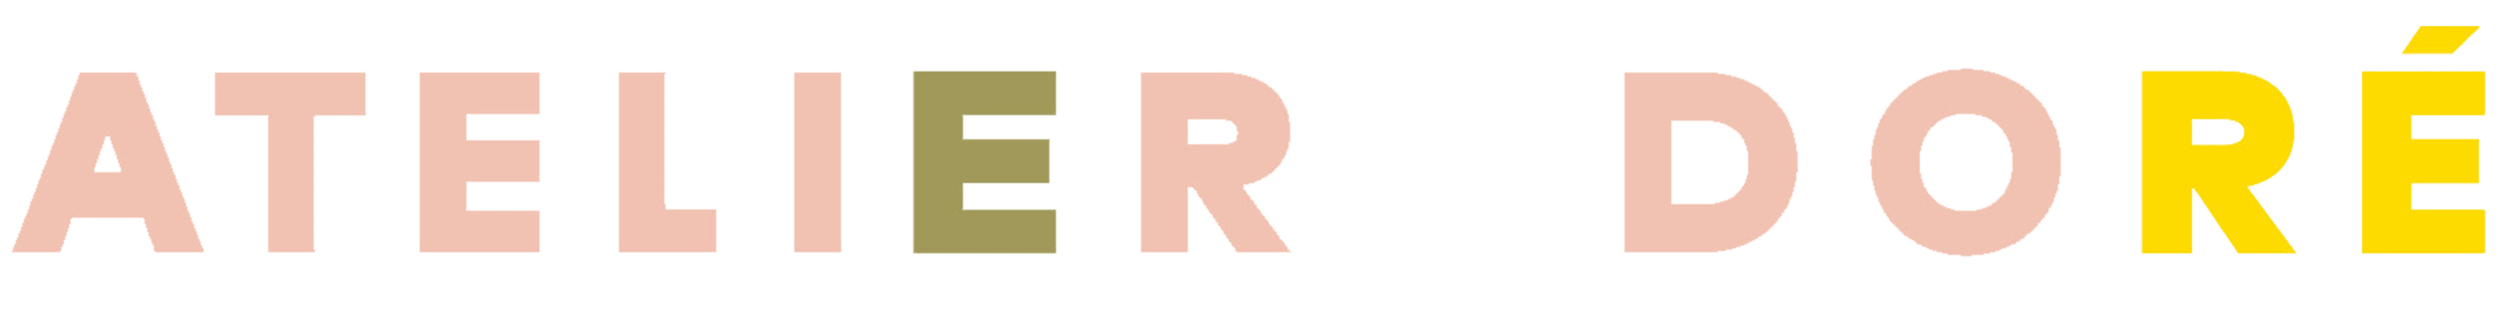 AtelierDore_Logo (2).png